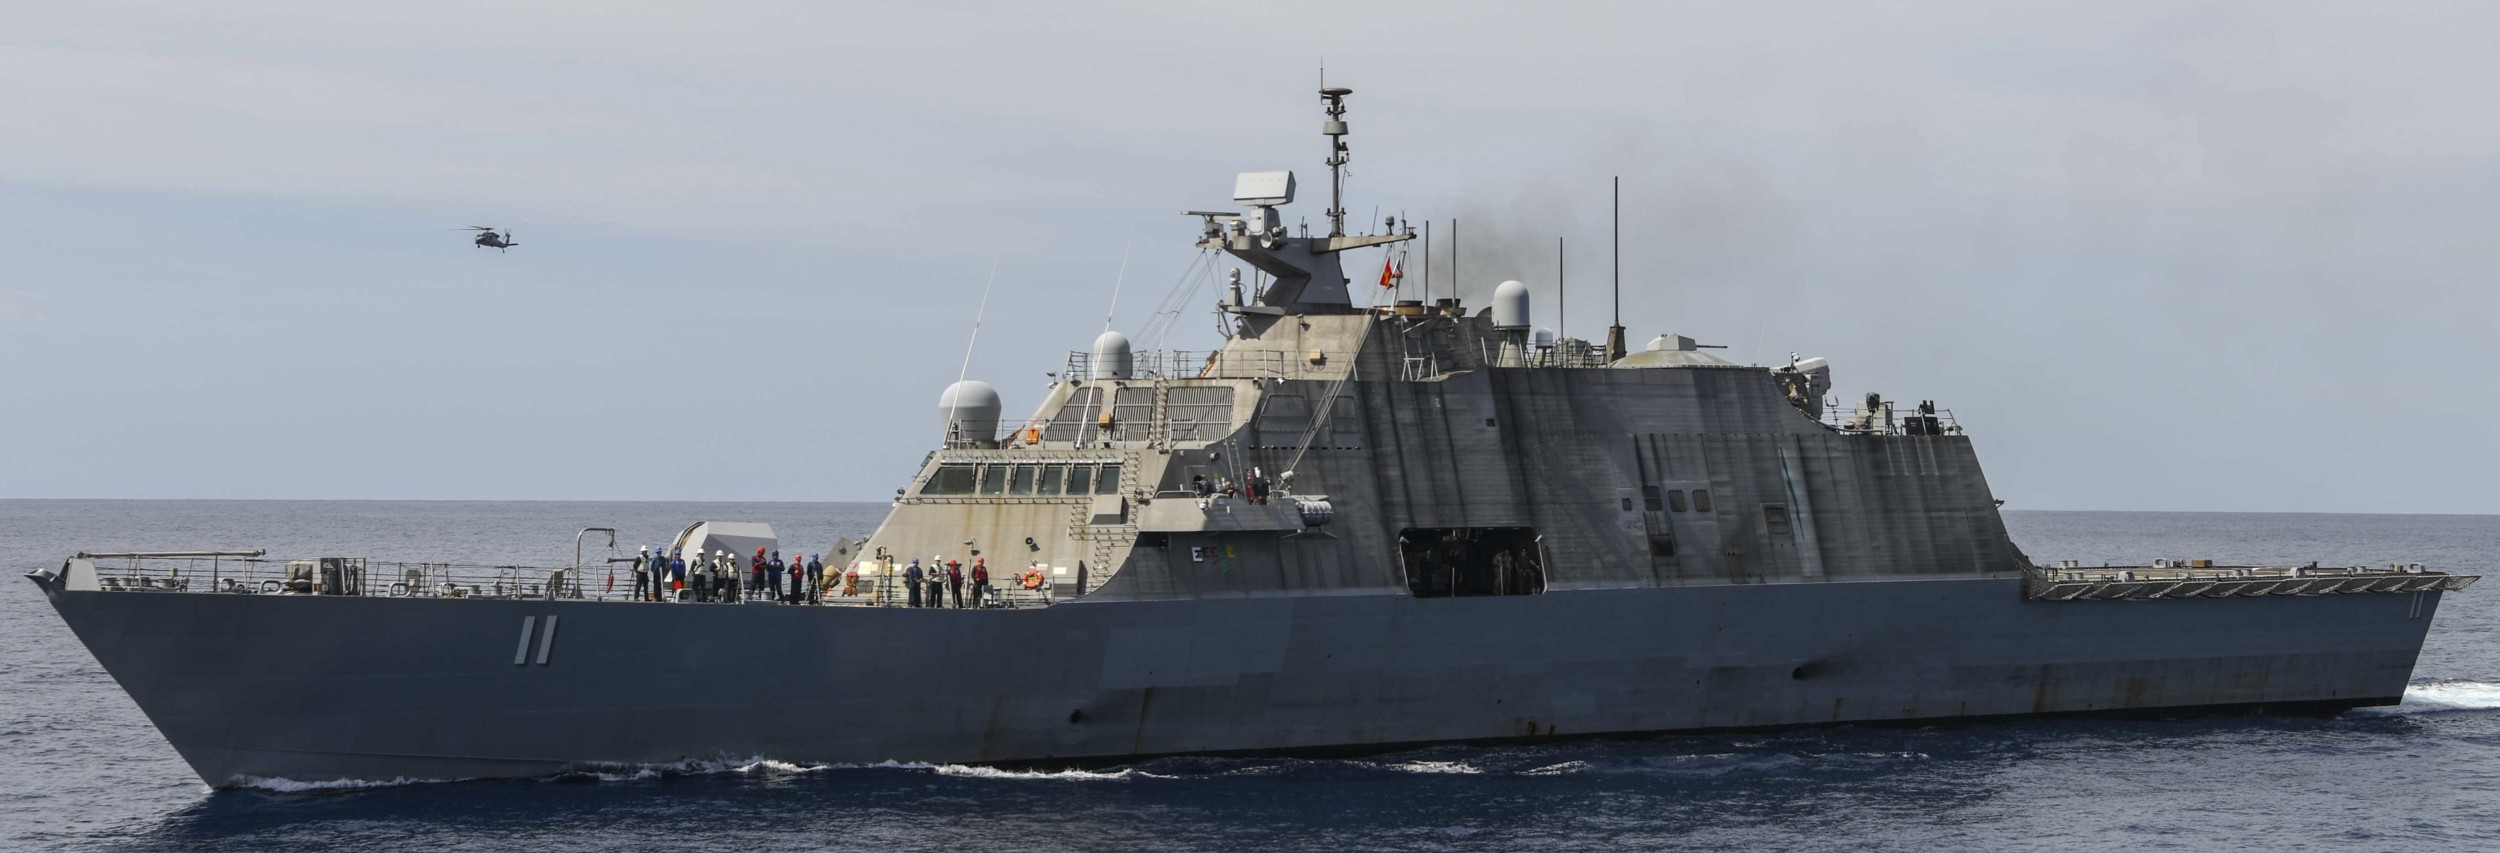 lcs-11 uss sioux city freedom class littoral combat ship us navy atlantic ocean 85